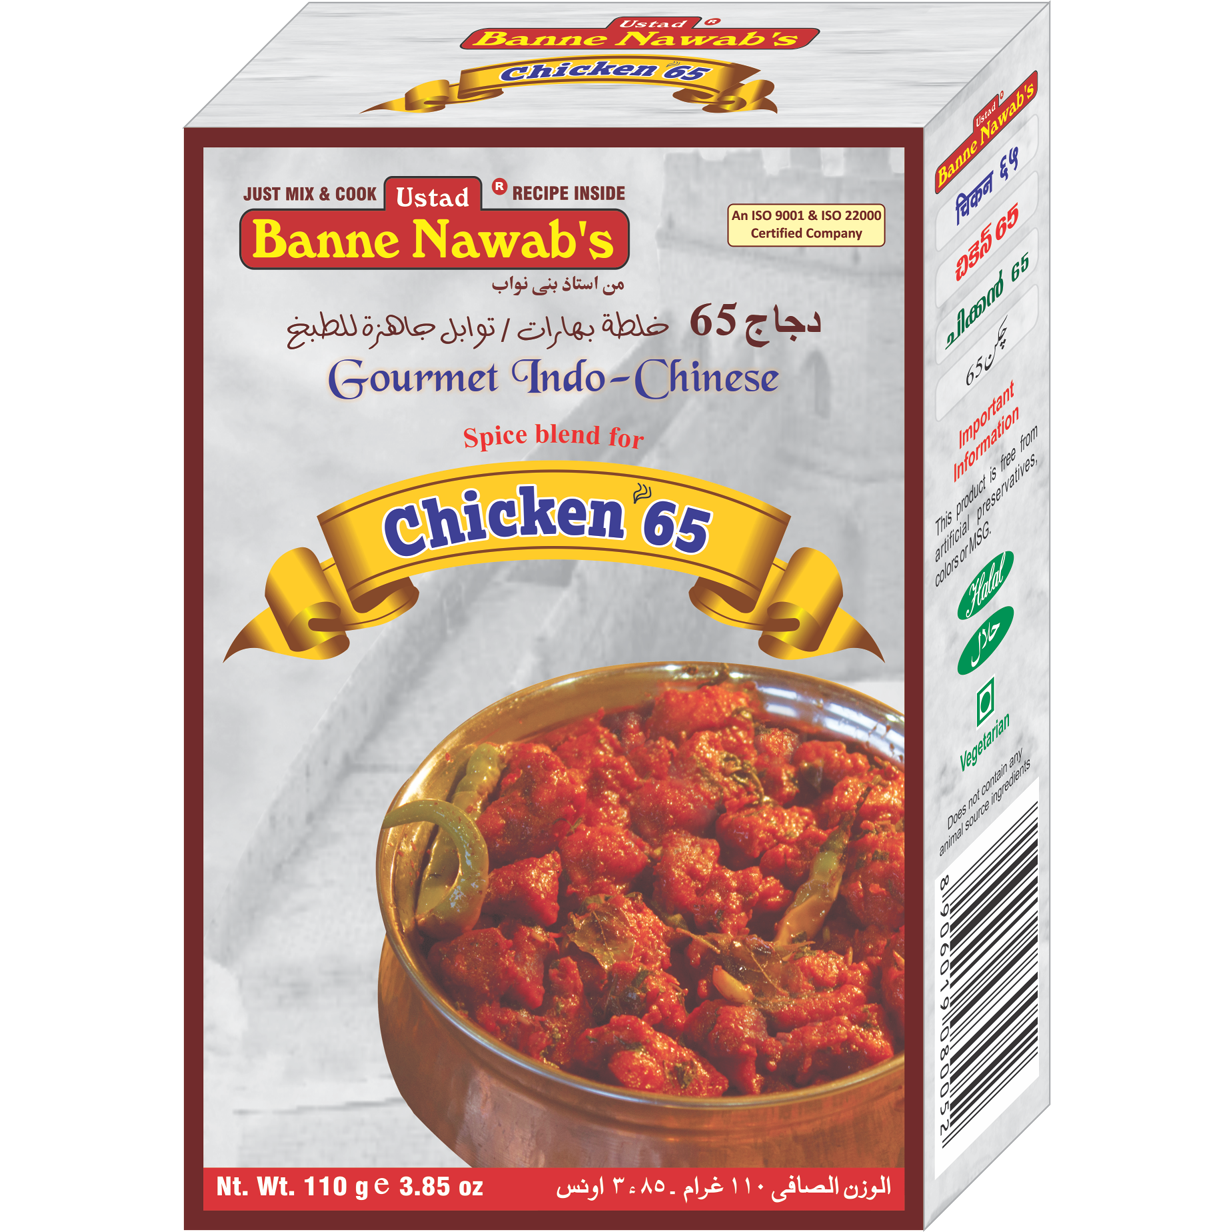 Case of 12 - Ustad Banne Nawab's Chicken 65 Masala - 110 Gm (3.85 Oz)